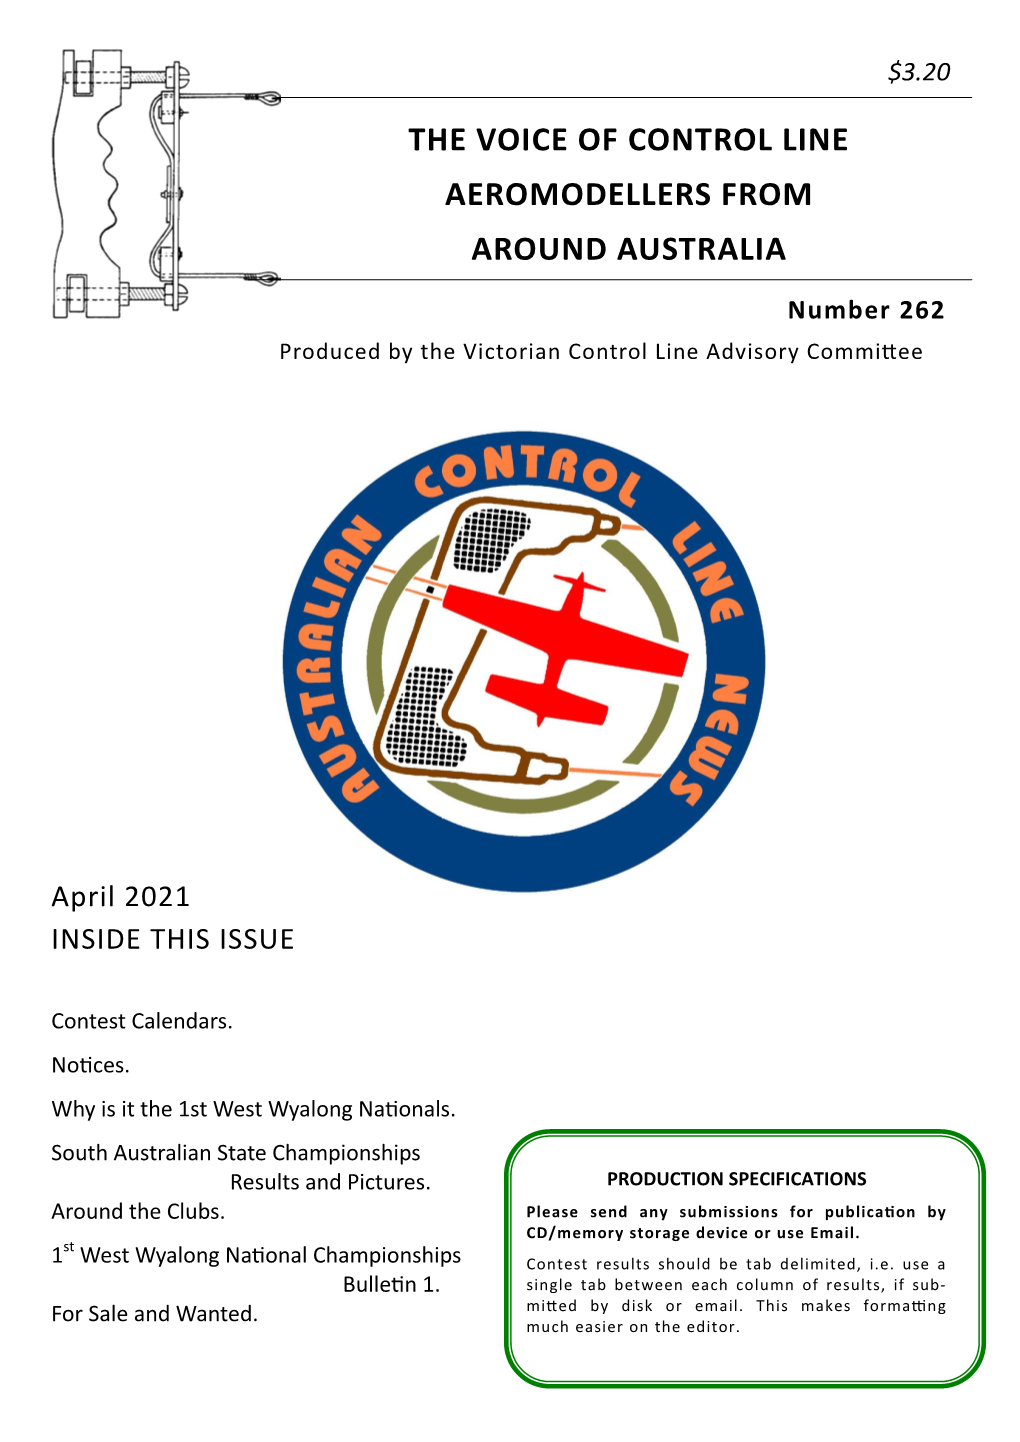 April 2021 Edition of Australian Control-Line News